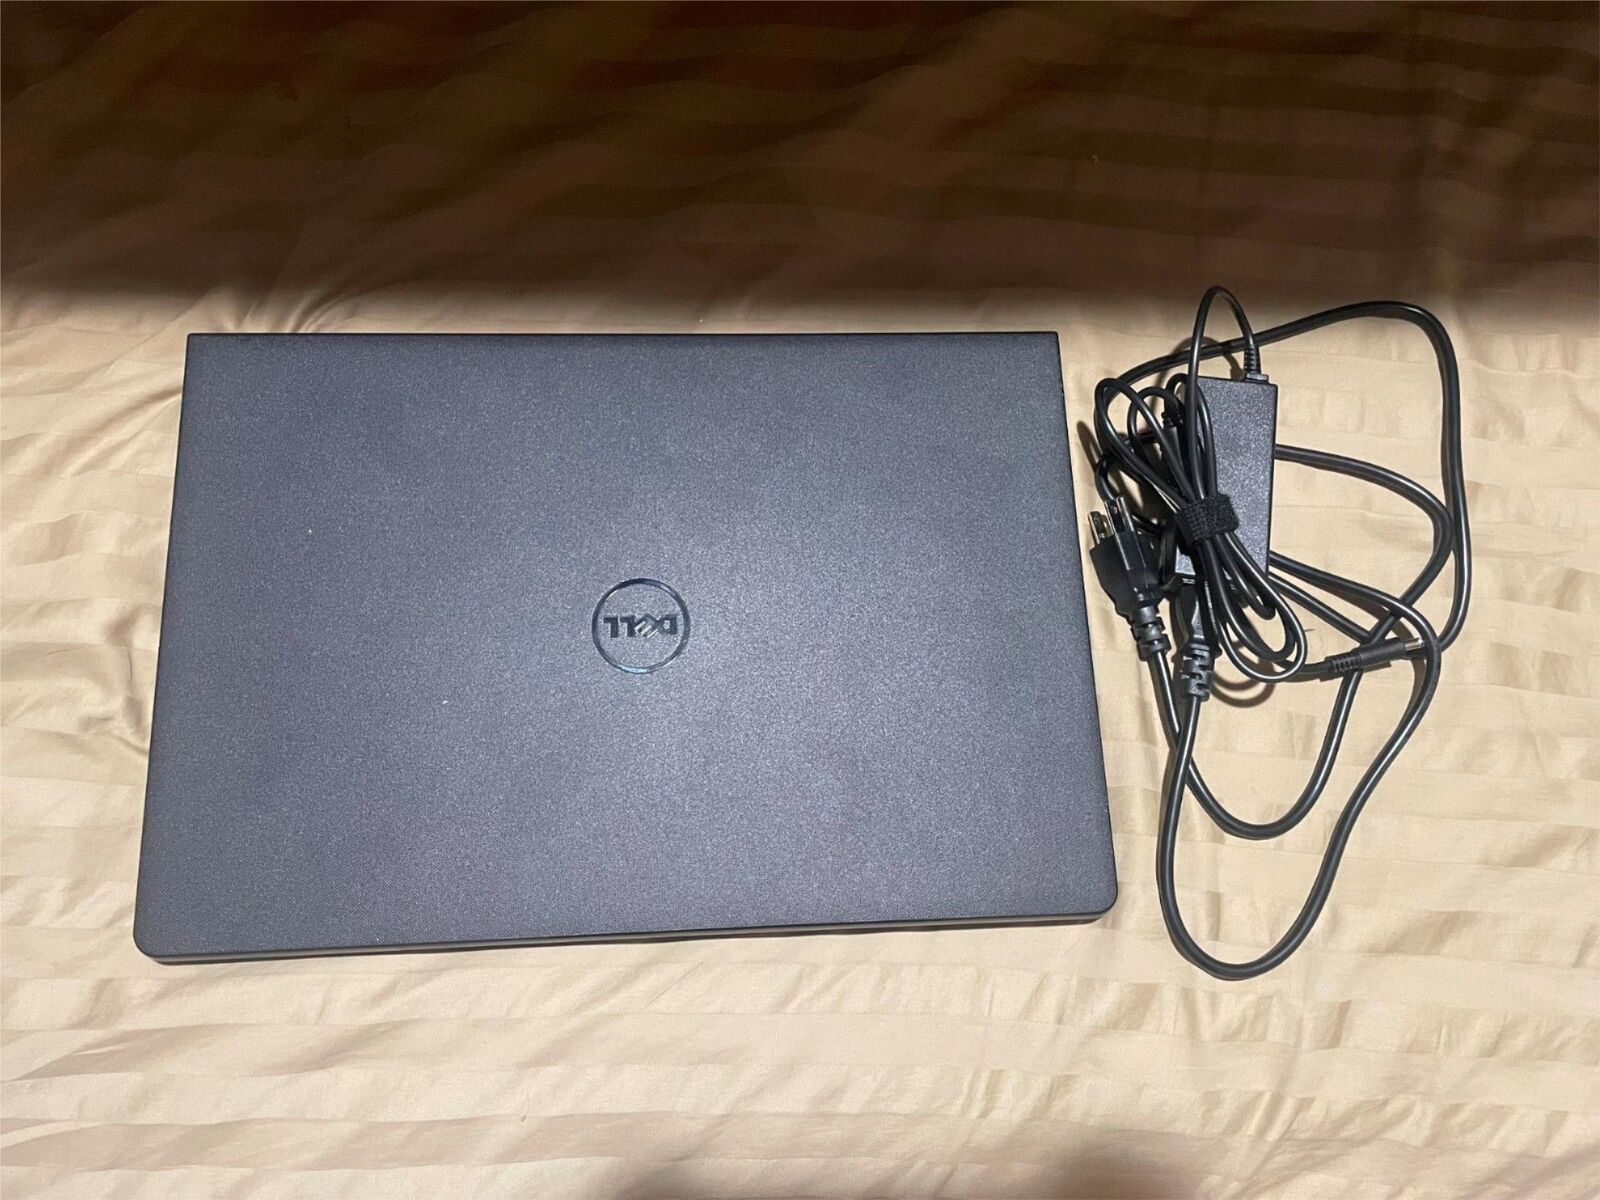 Dell Inspiron 15.6" Touchscreen Laptop, Intel Pentium N3540, 4GB RAM, 500GB HD